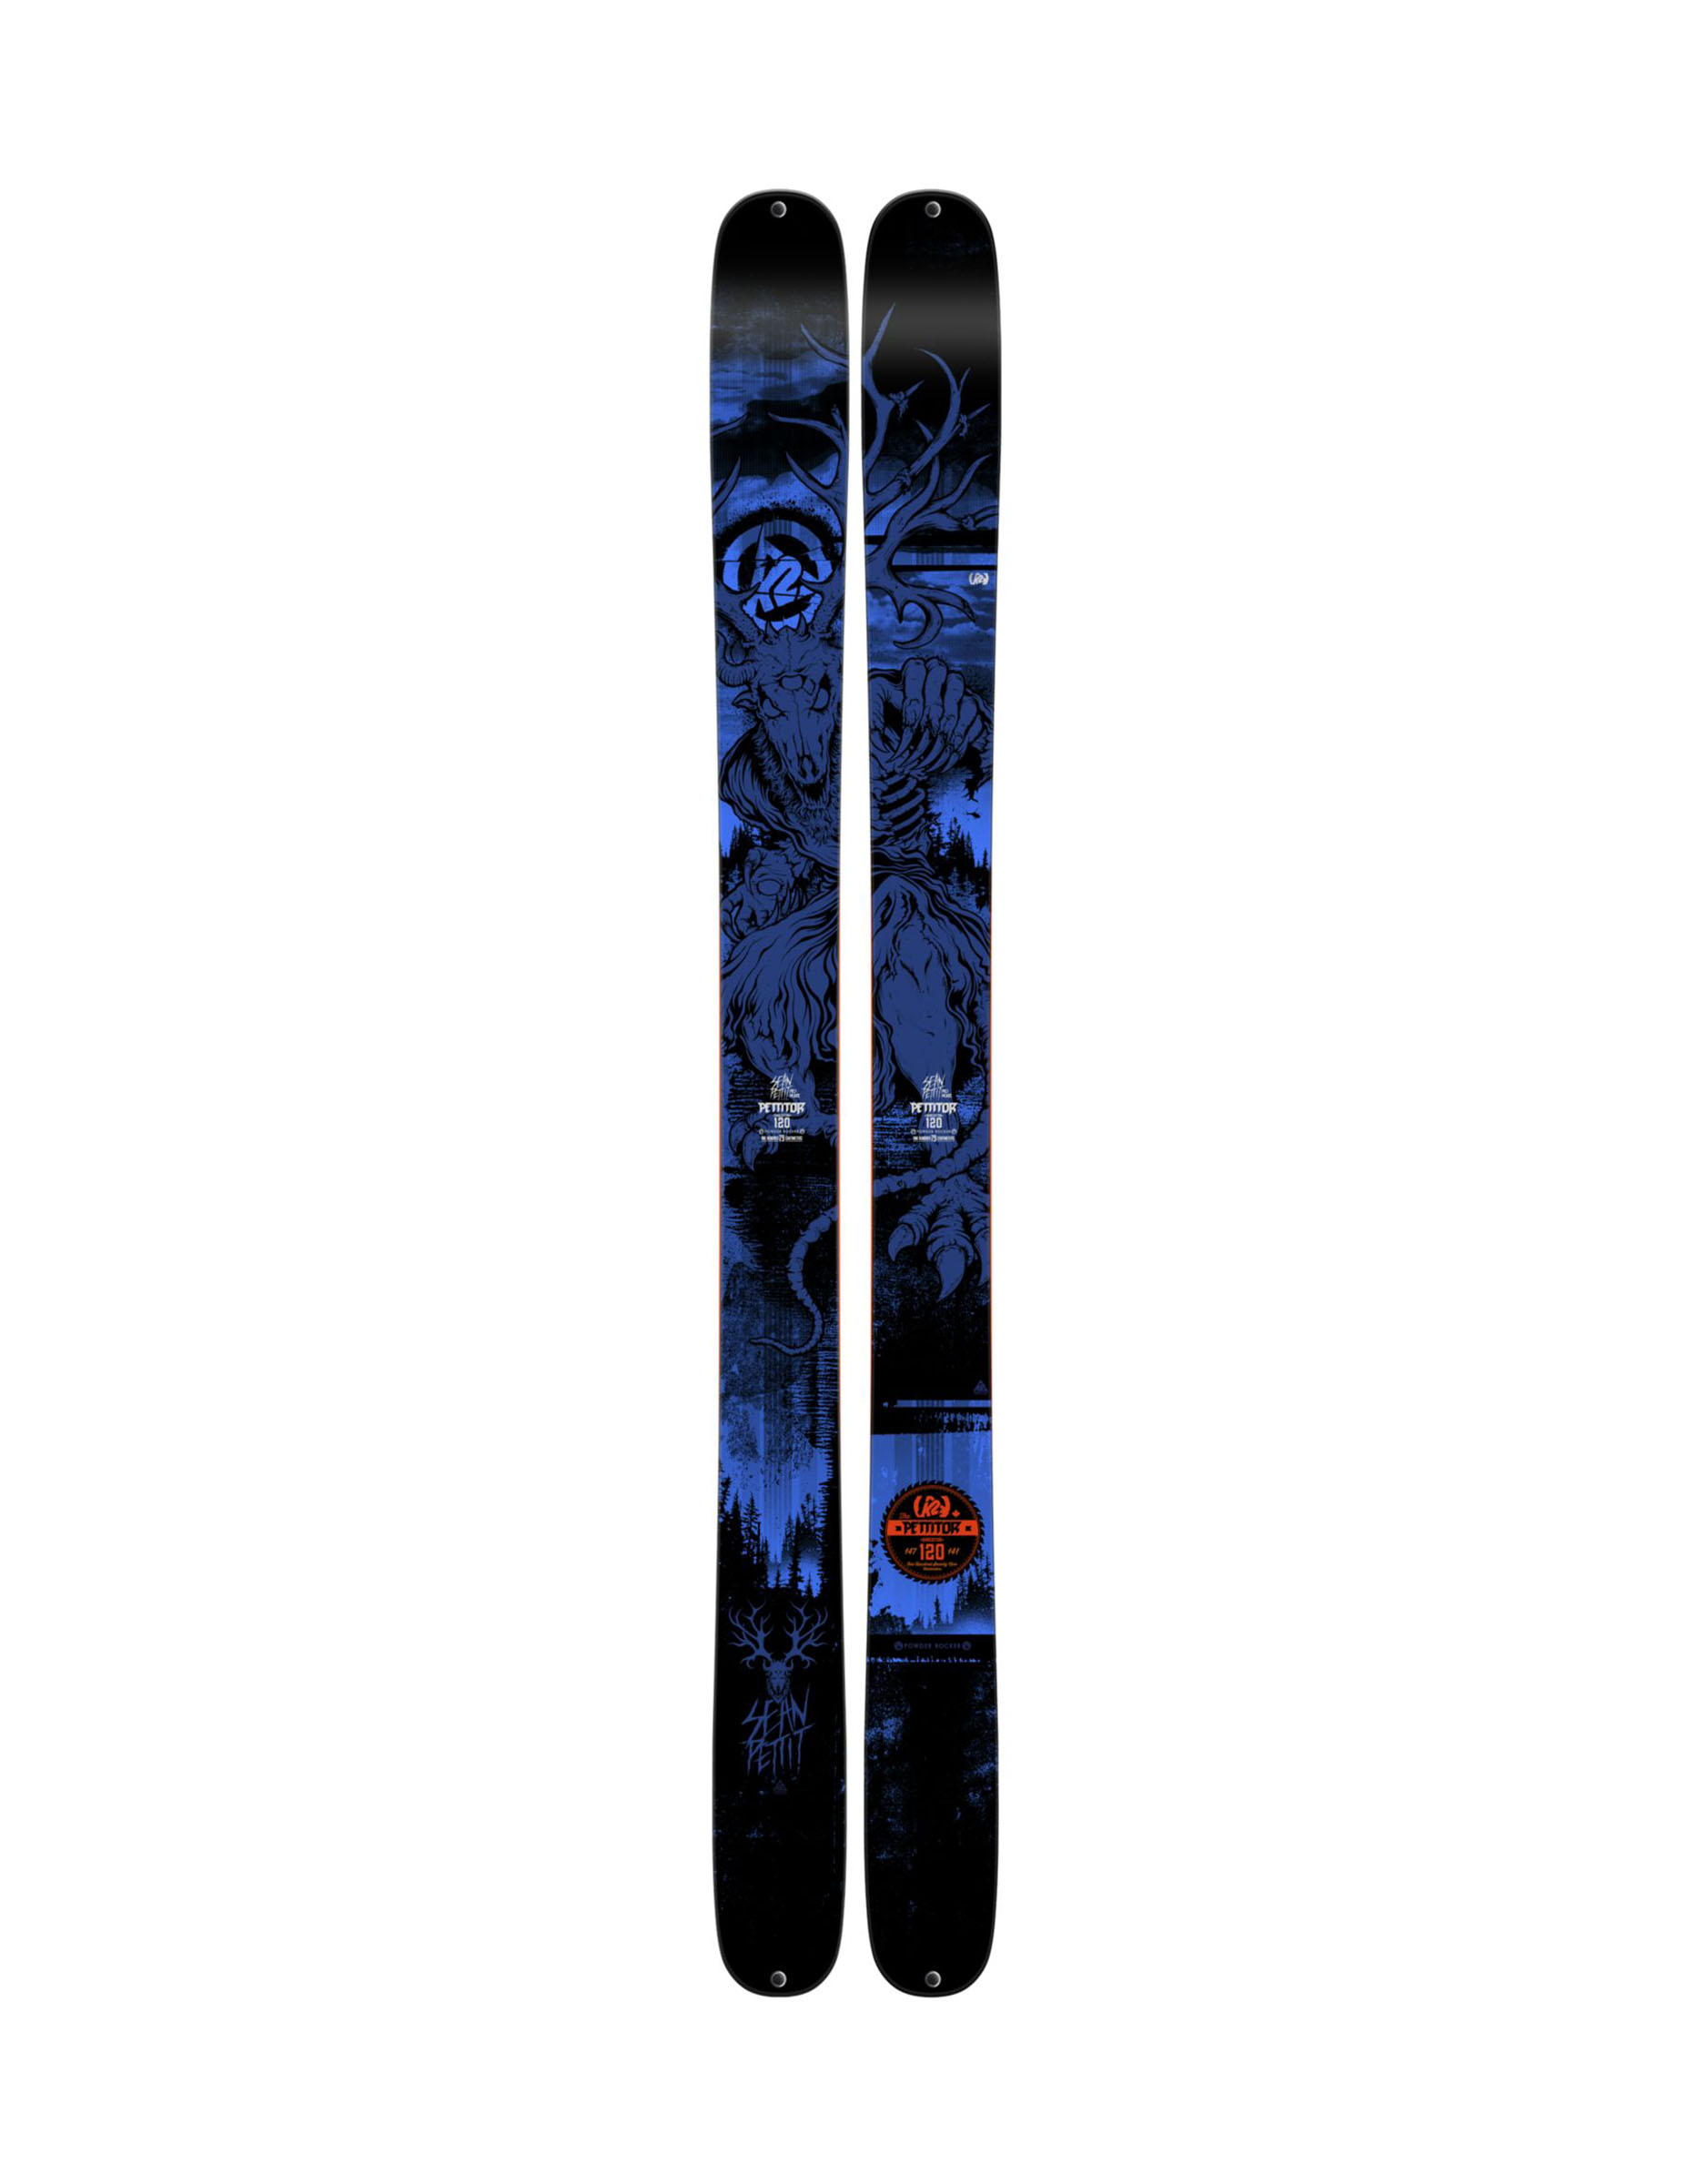 2015 K2 Mens Skis - On Sale Now - Buy Online or In-Store